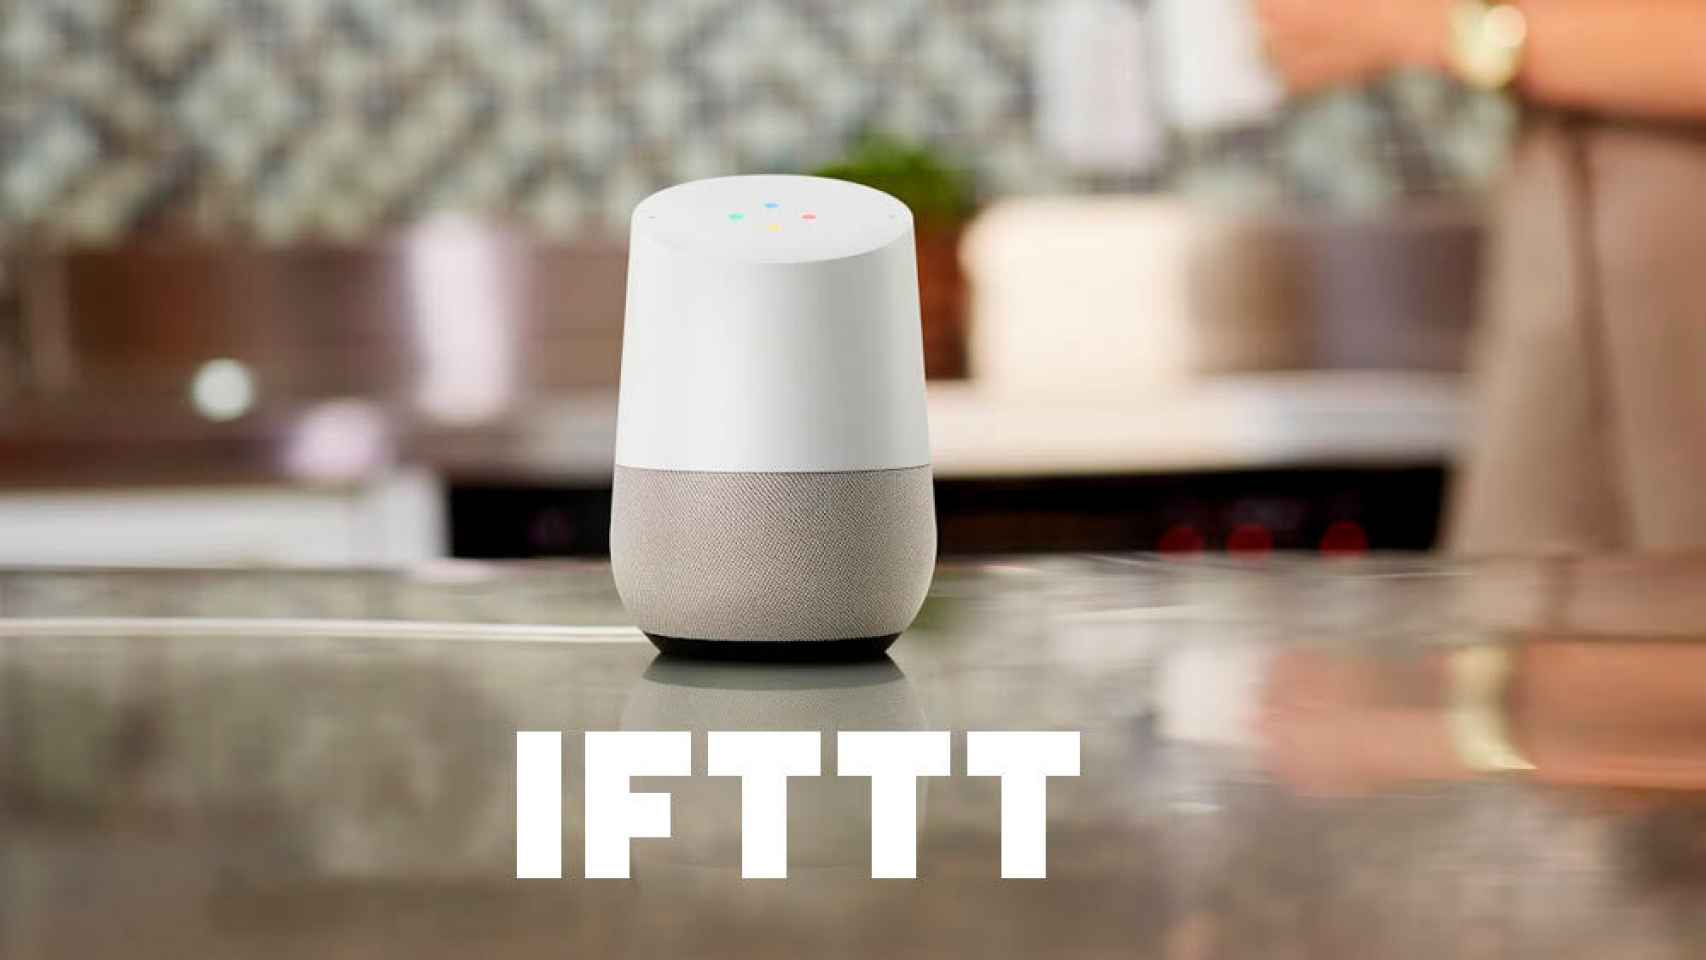 Google Assistant es ahora mejor con IFTTT